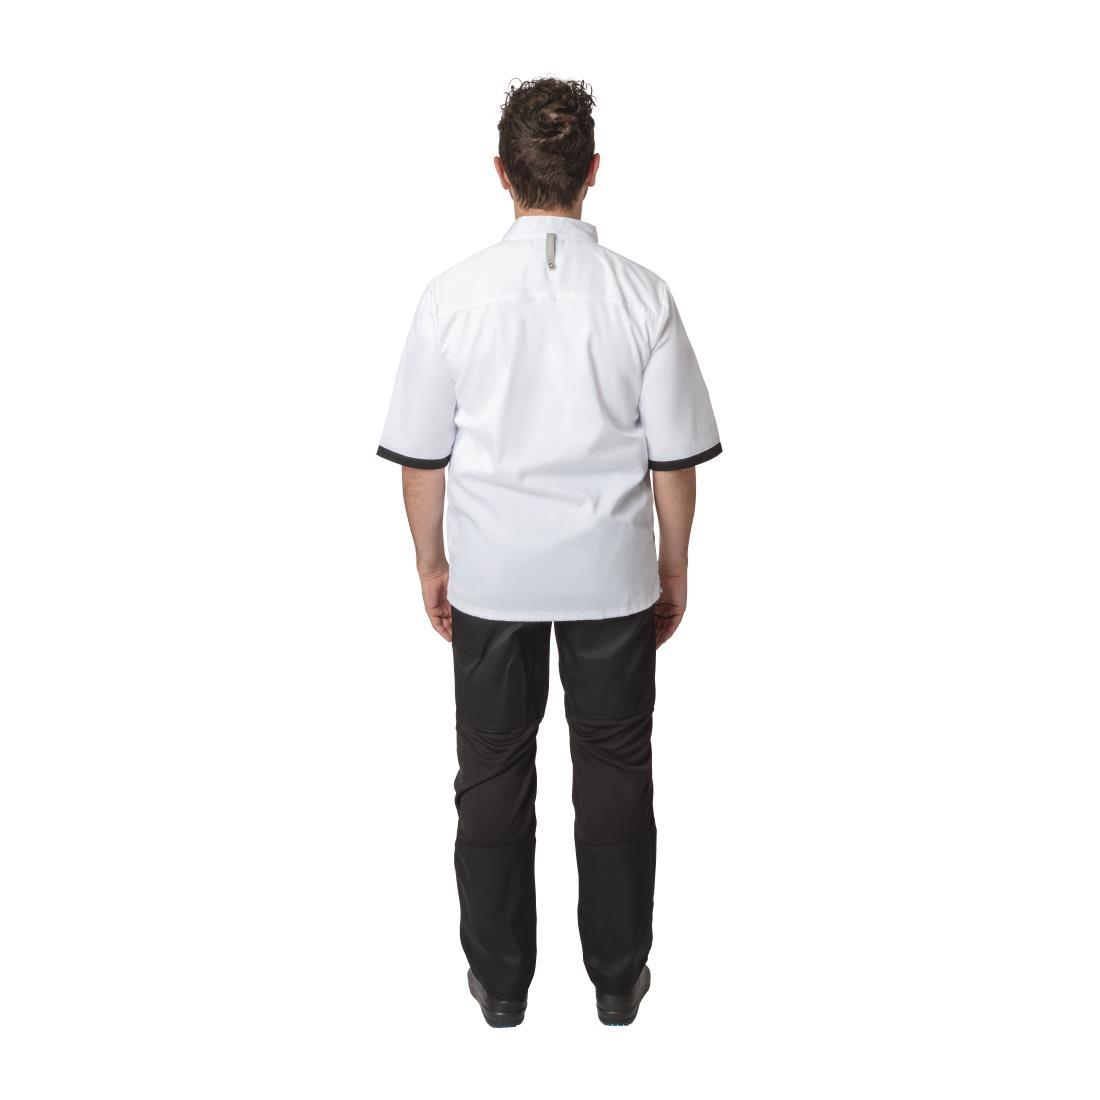 Southside Unisex Chefs Jacket Short Sleeve White XL - B998-XL  - 3